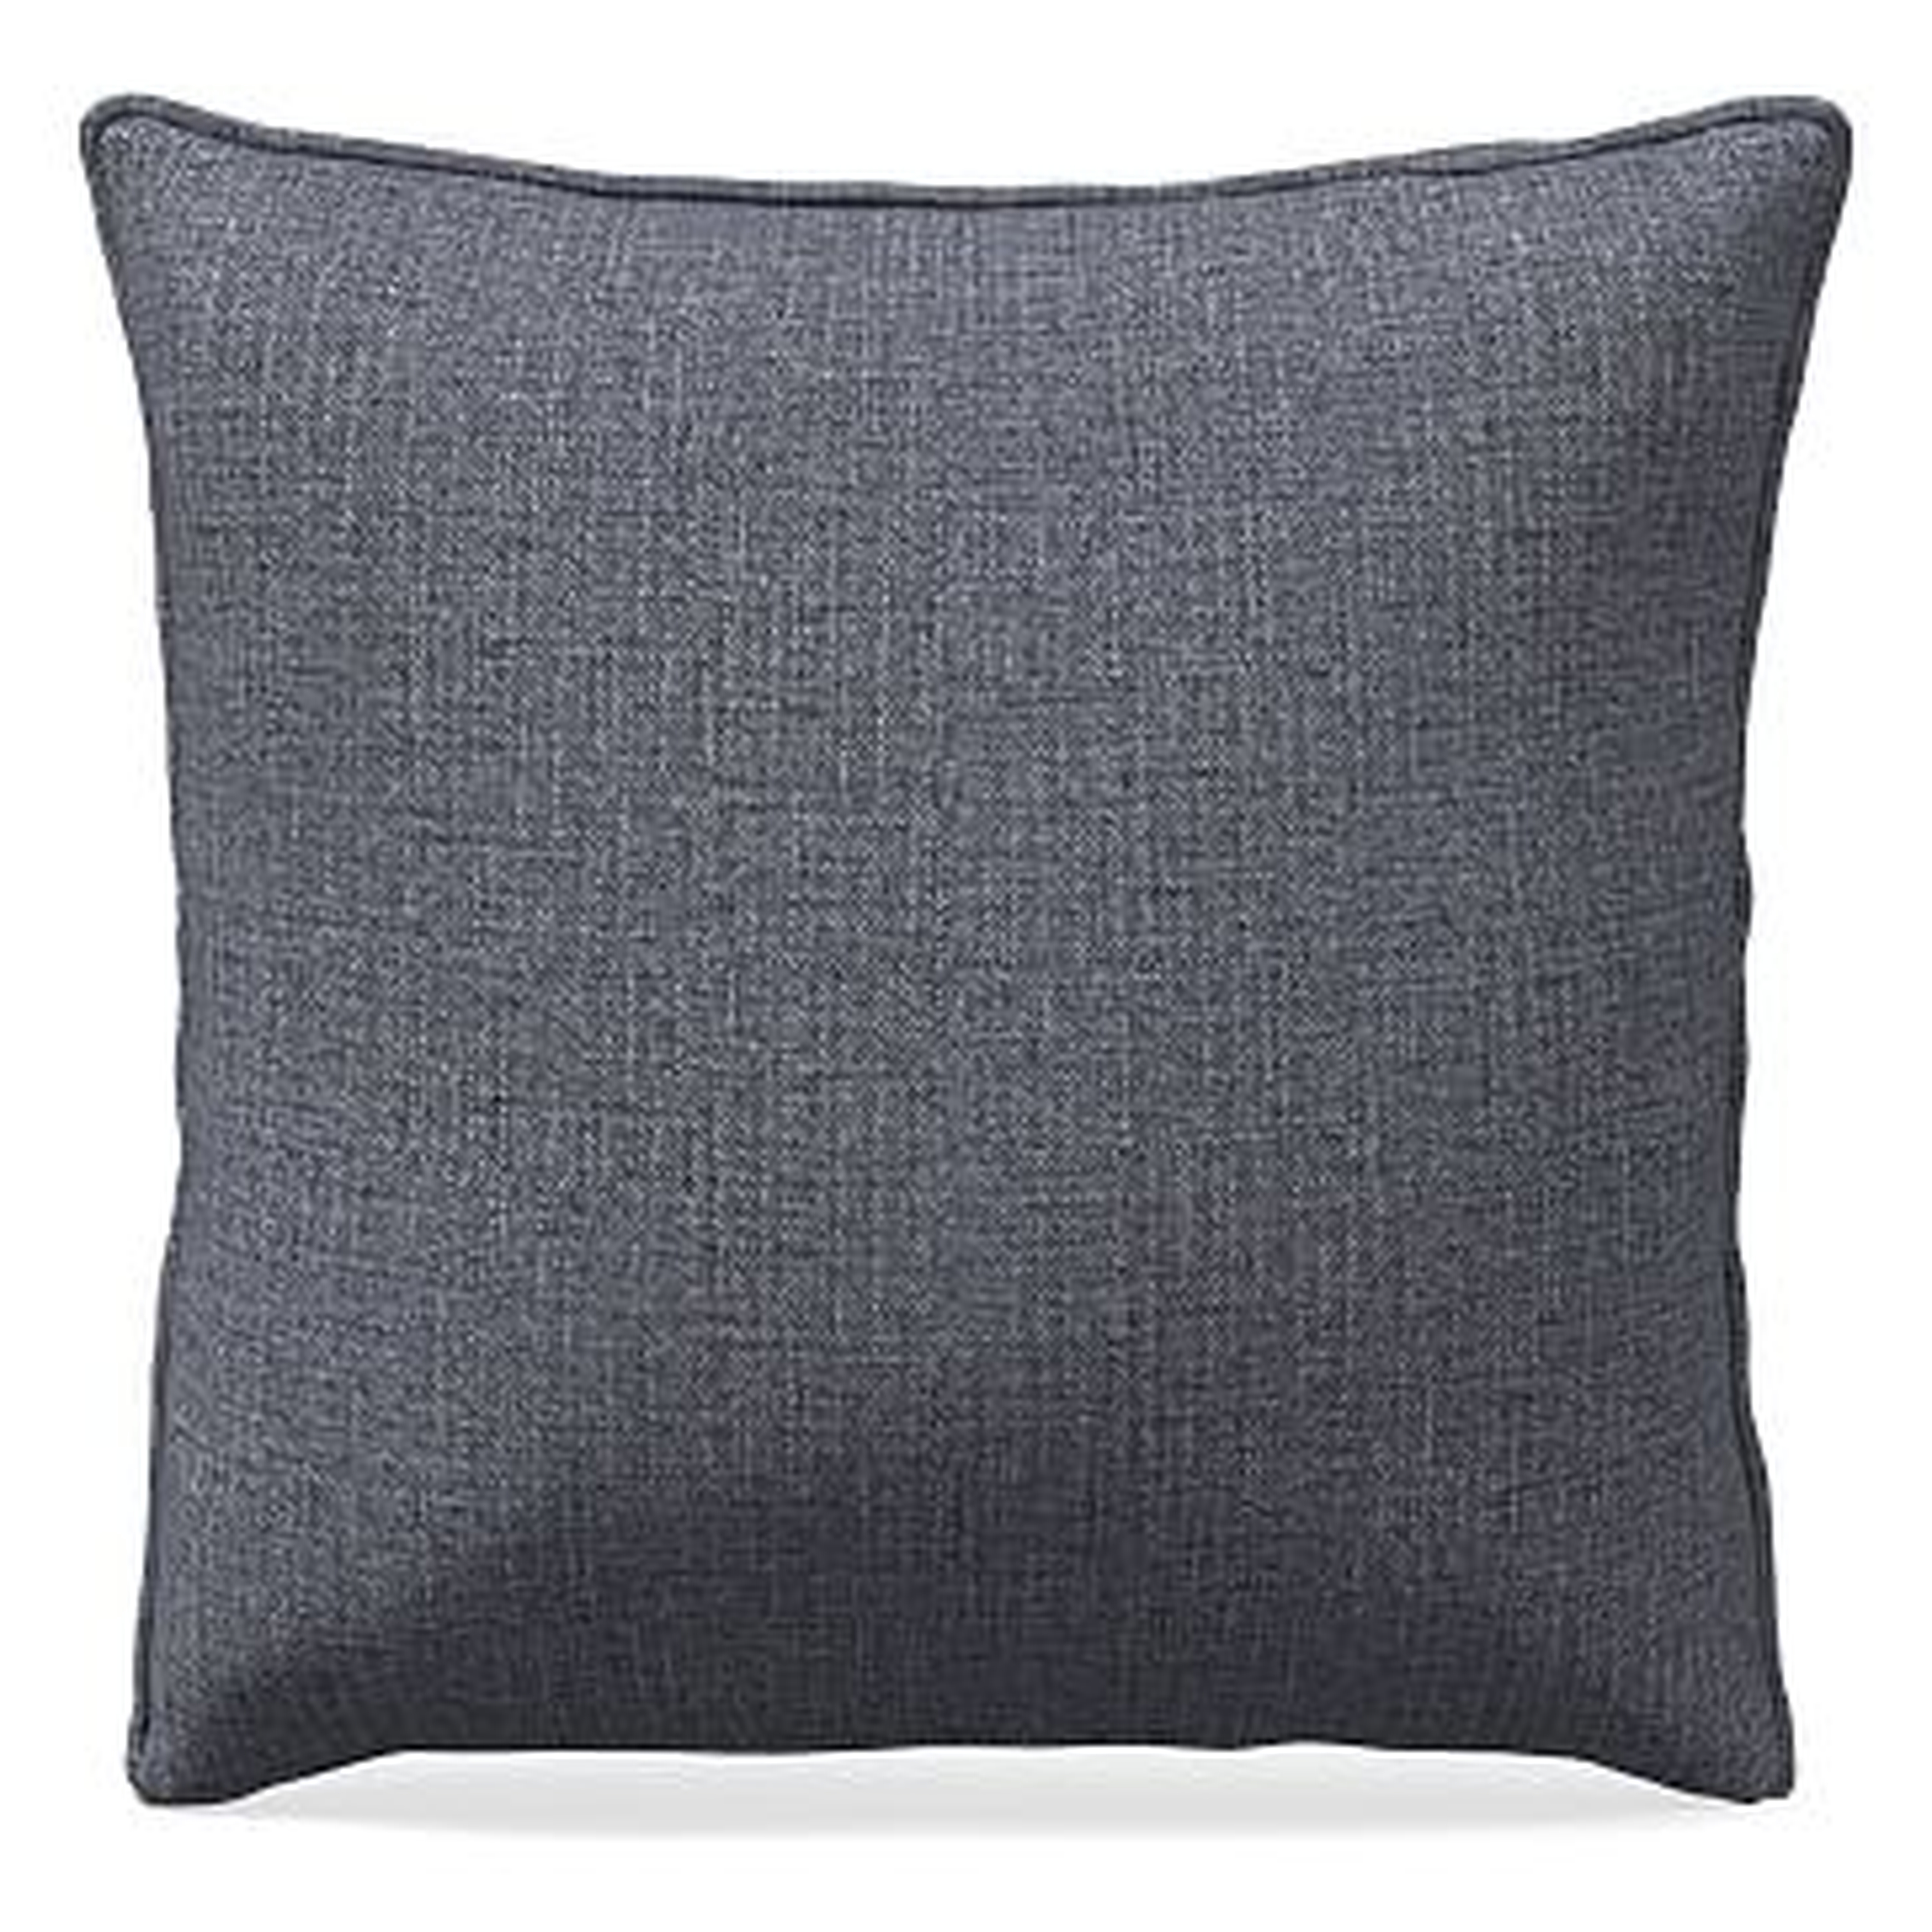 20"x 20" Welt Seam Pillow, N/A, Performance Yarn Dyed Linen Weave, Graphite, N/A - West Elm